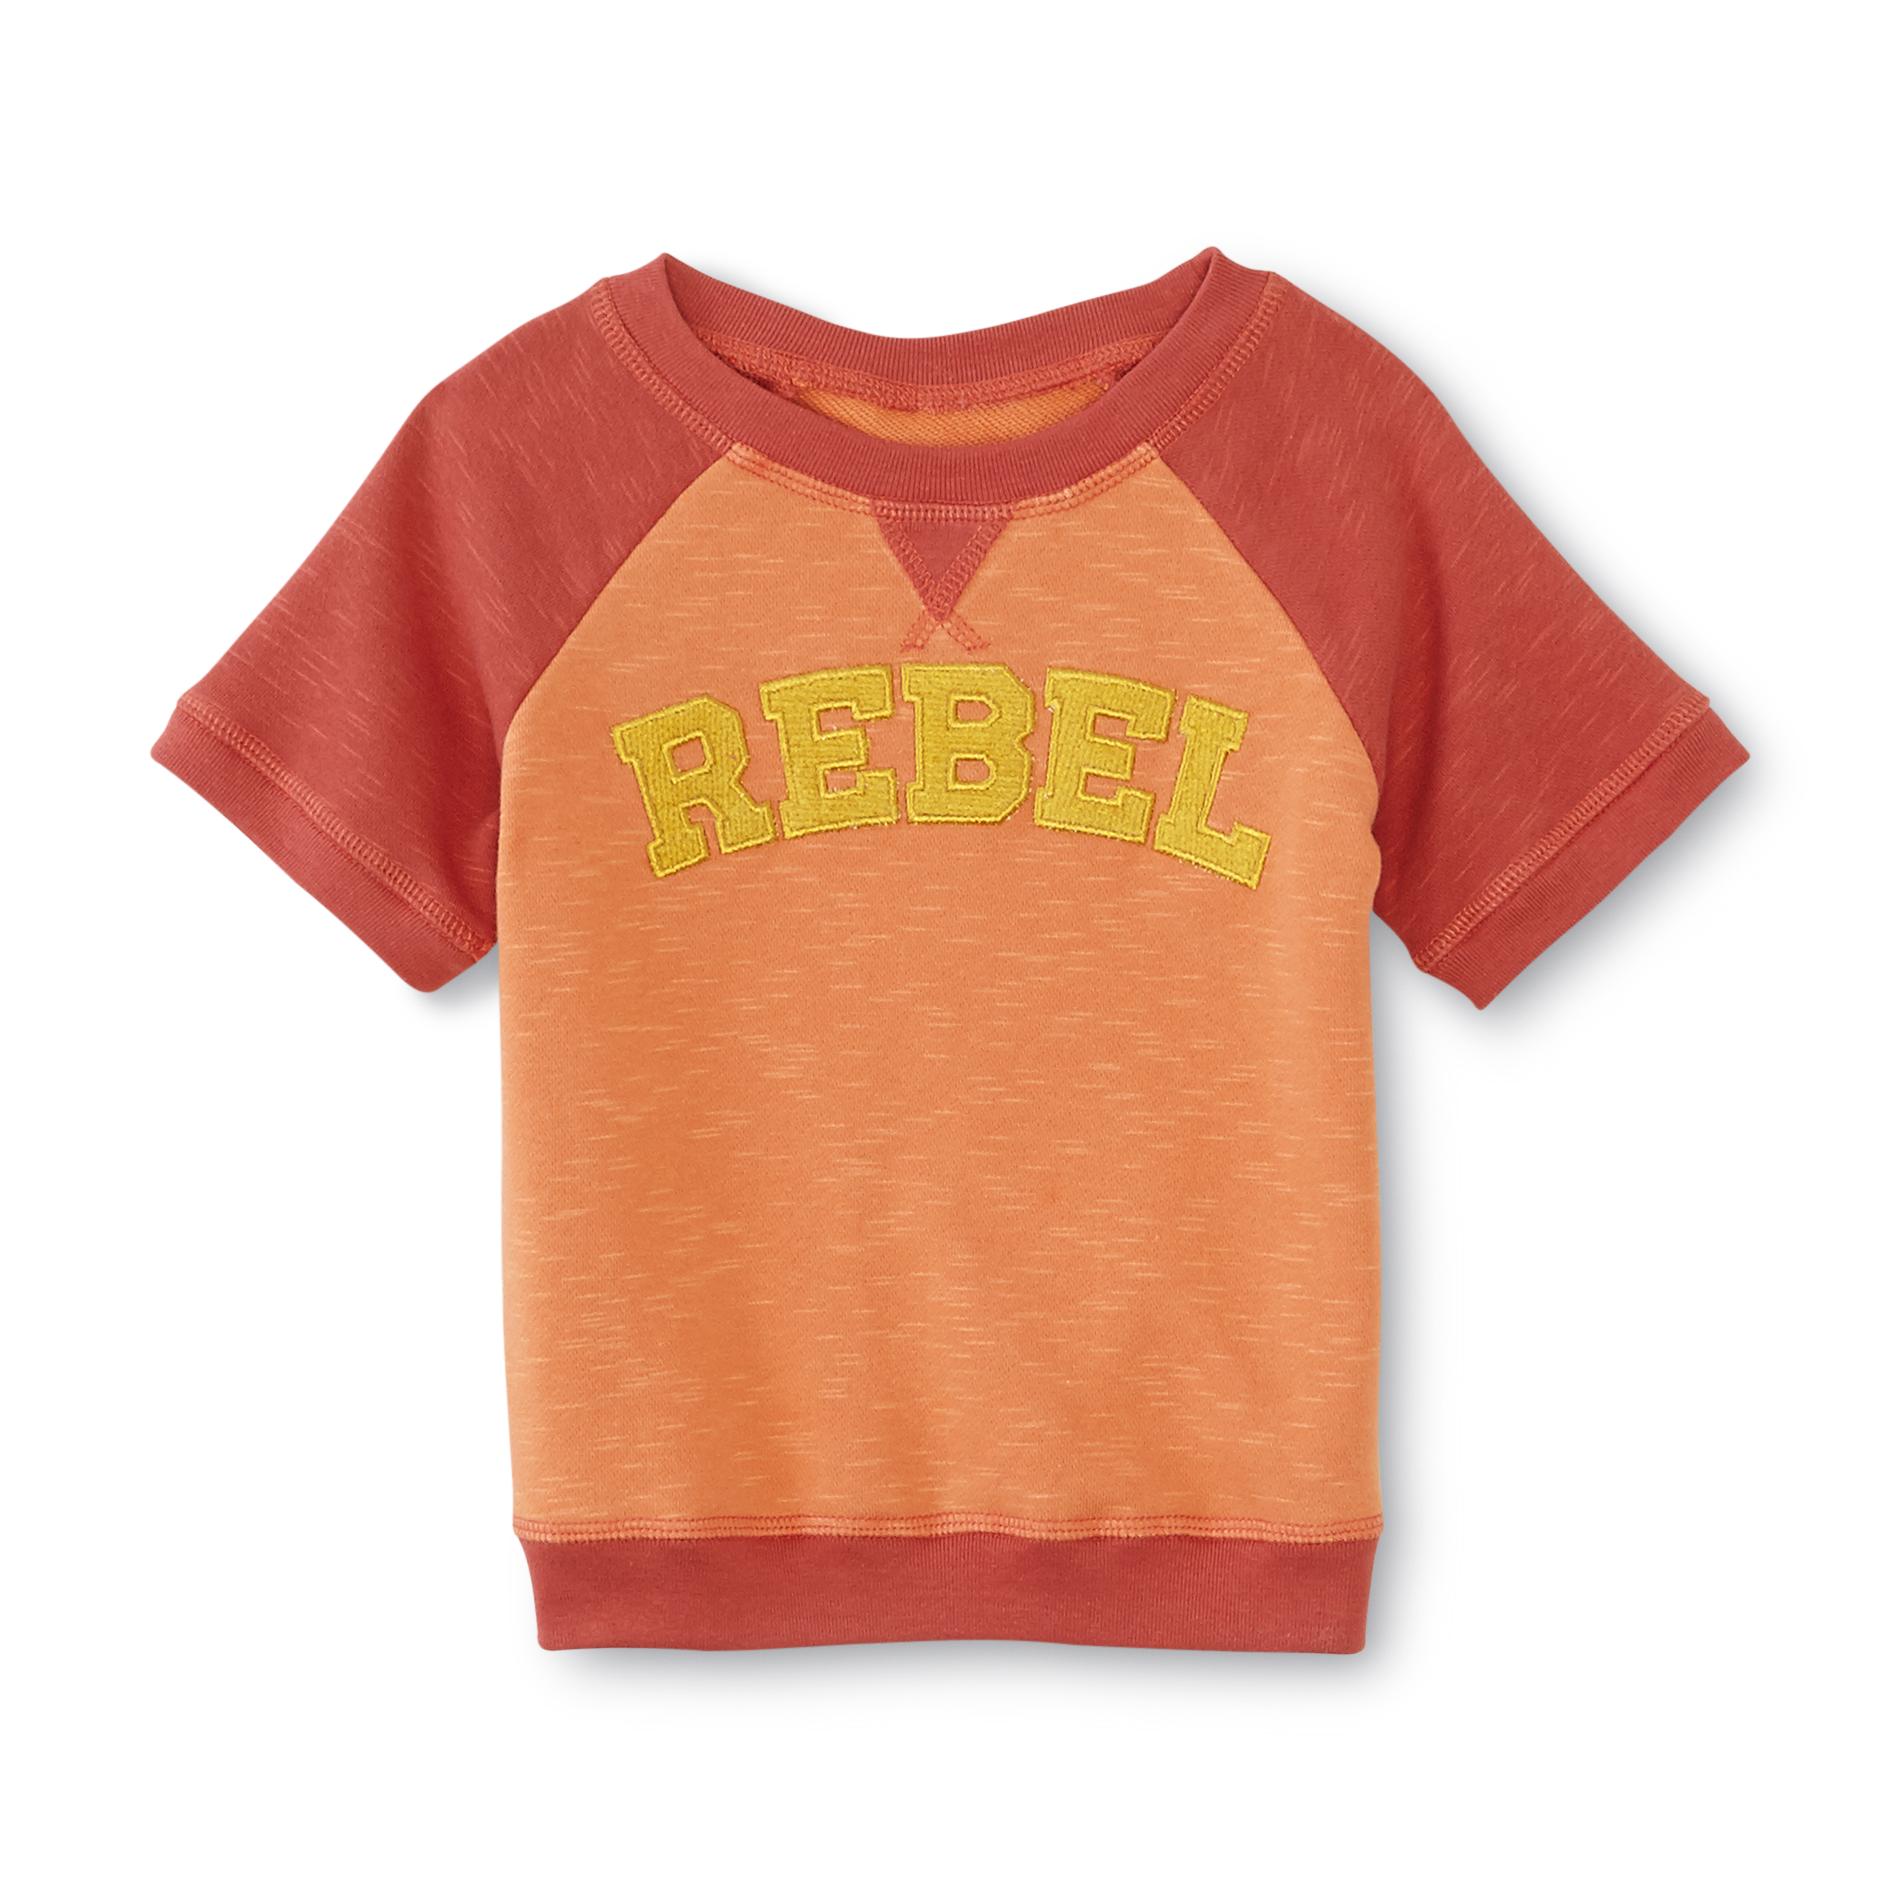 Route 66 Baby Toddler Boy's Short-Sleeve Sweatshirt - Rebel